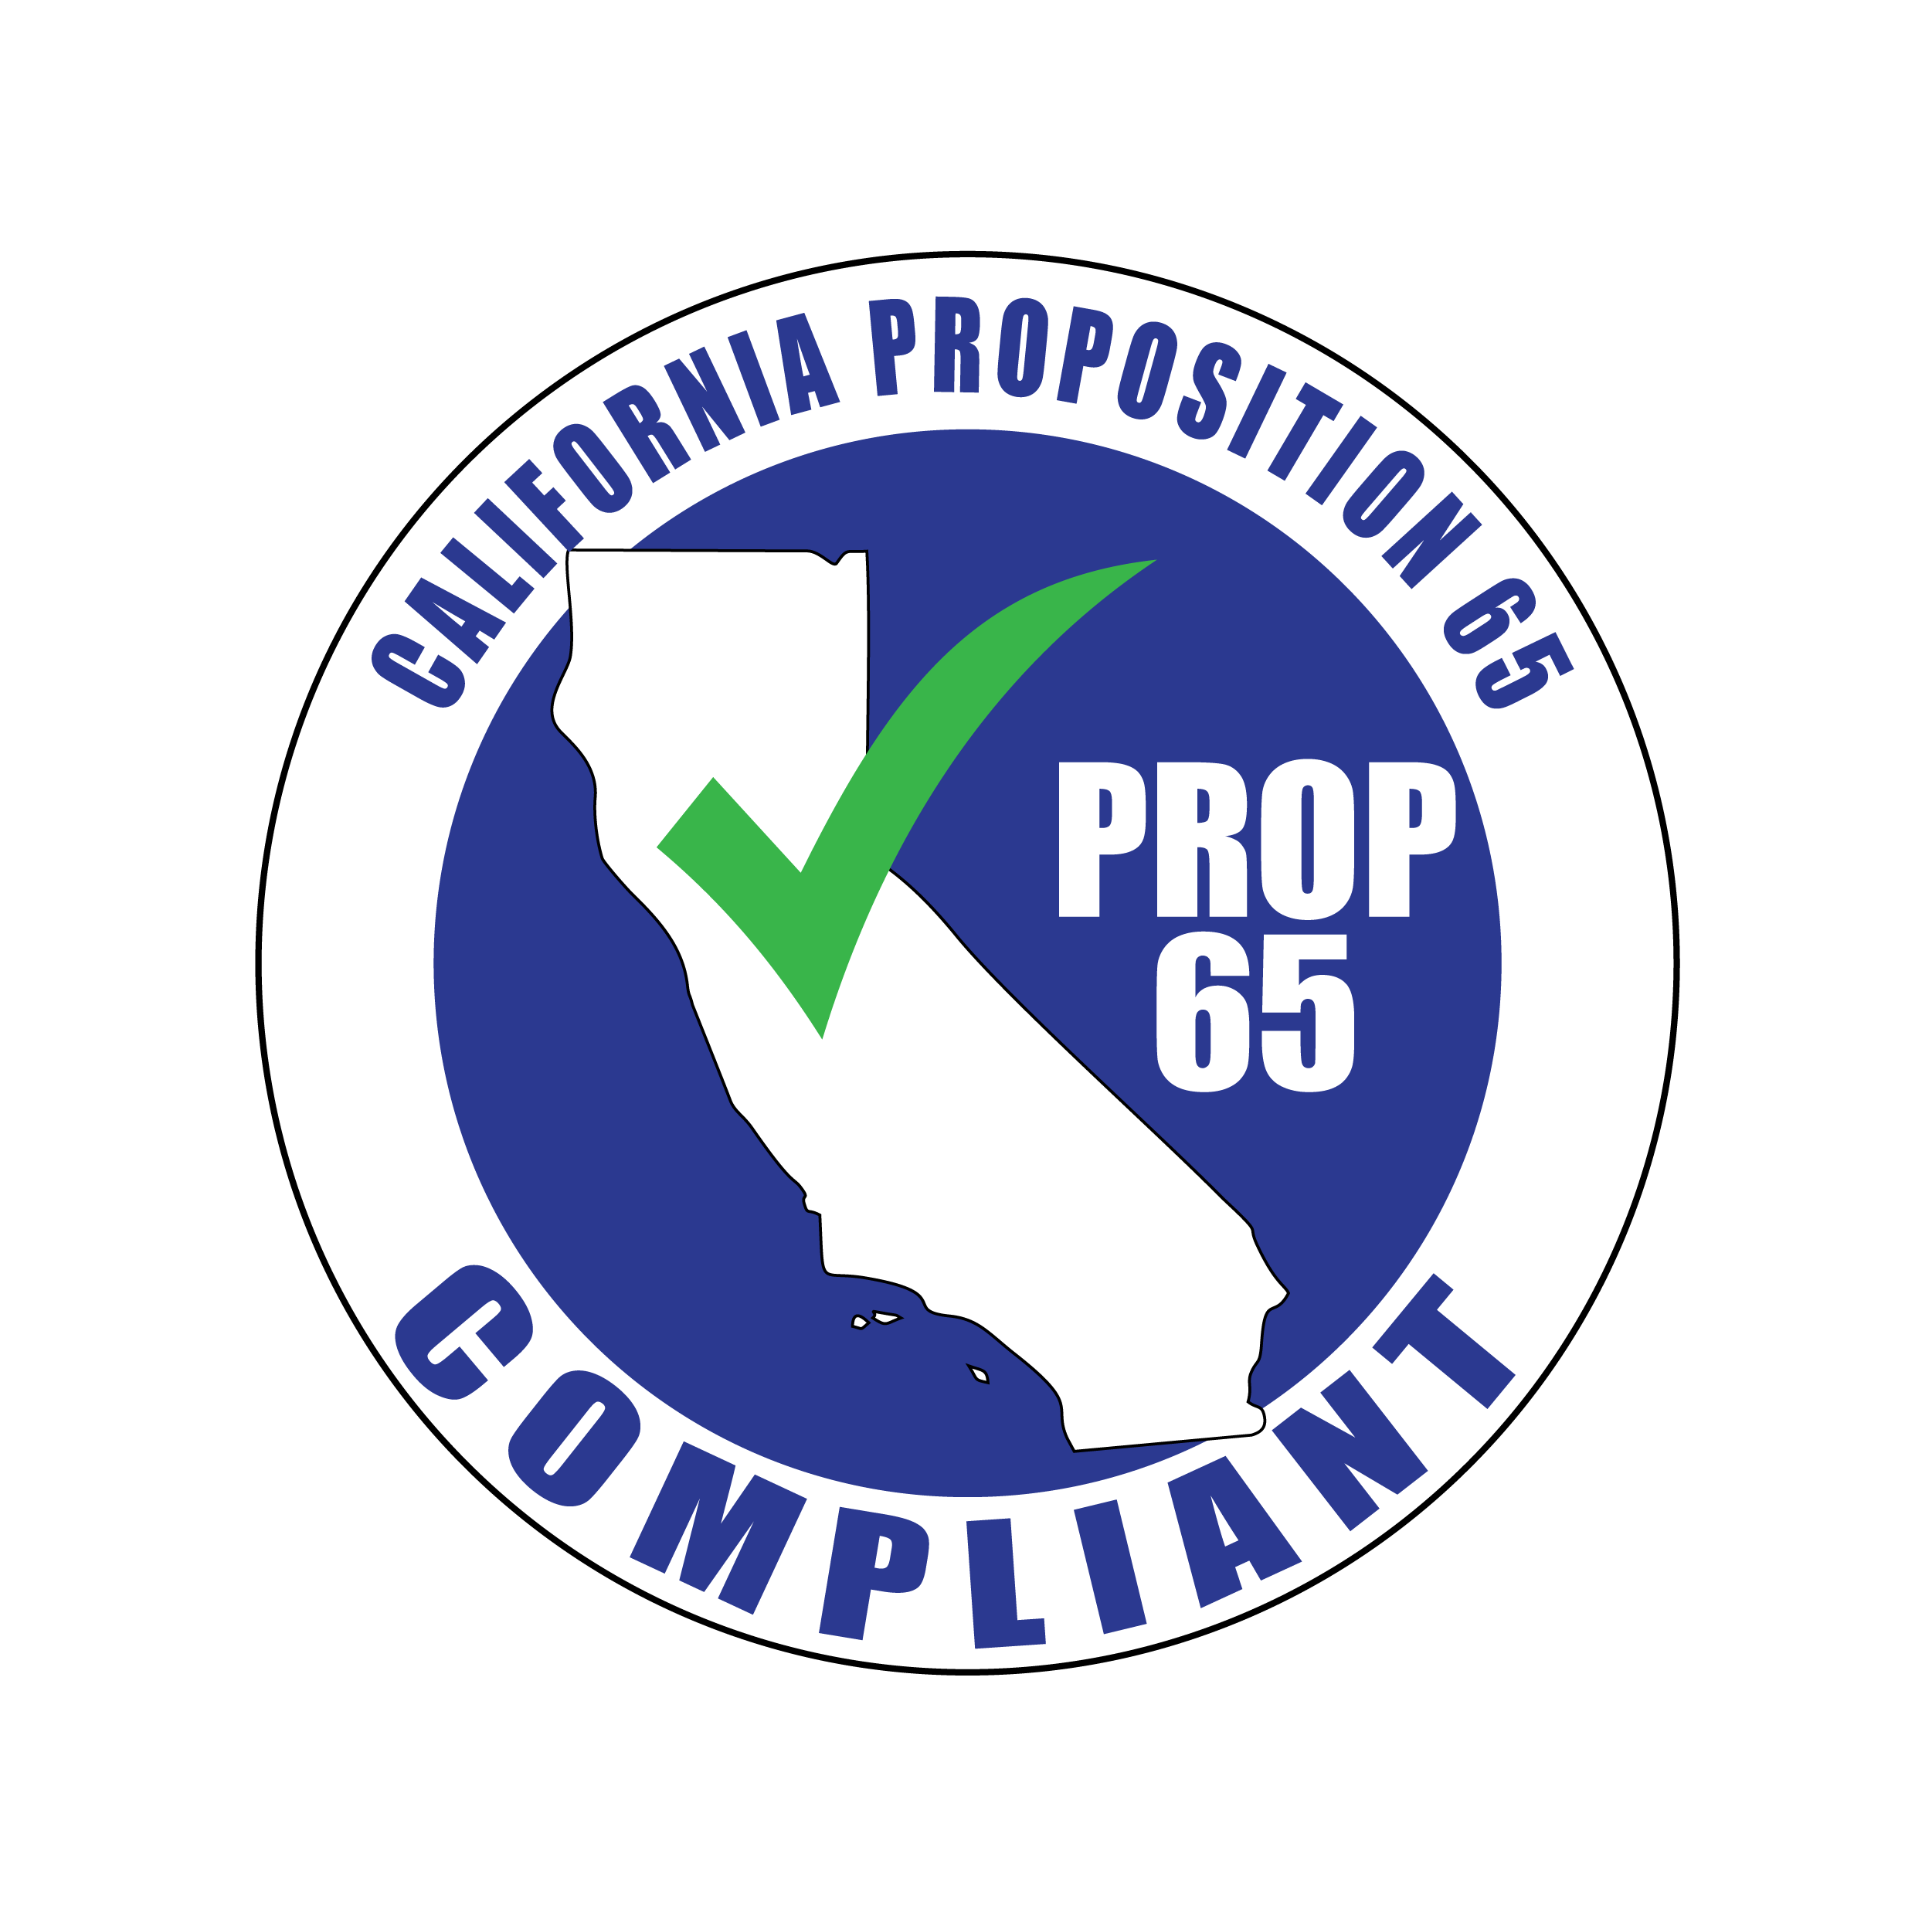 California Prop 65 Warning